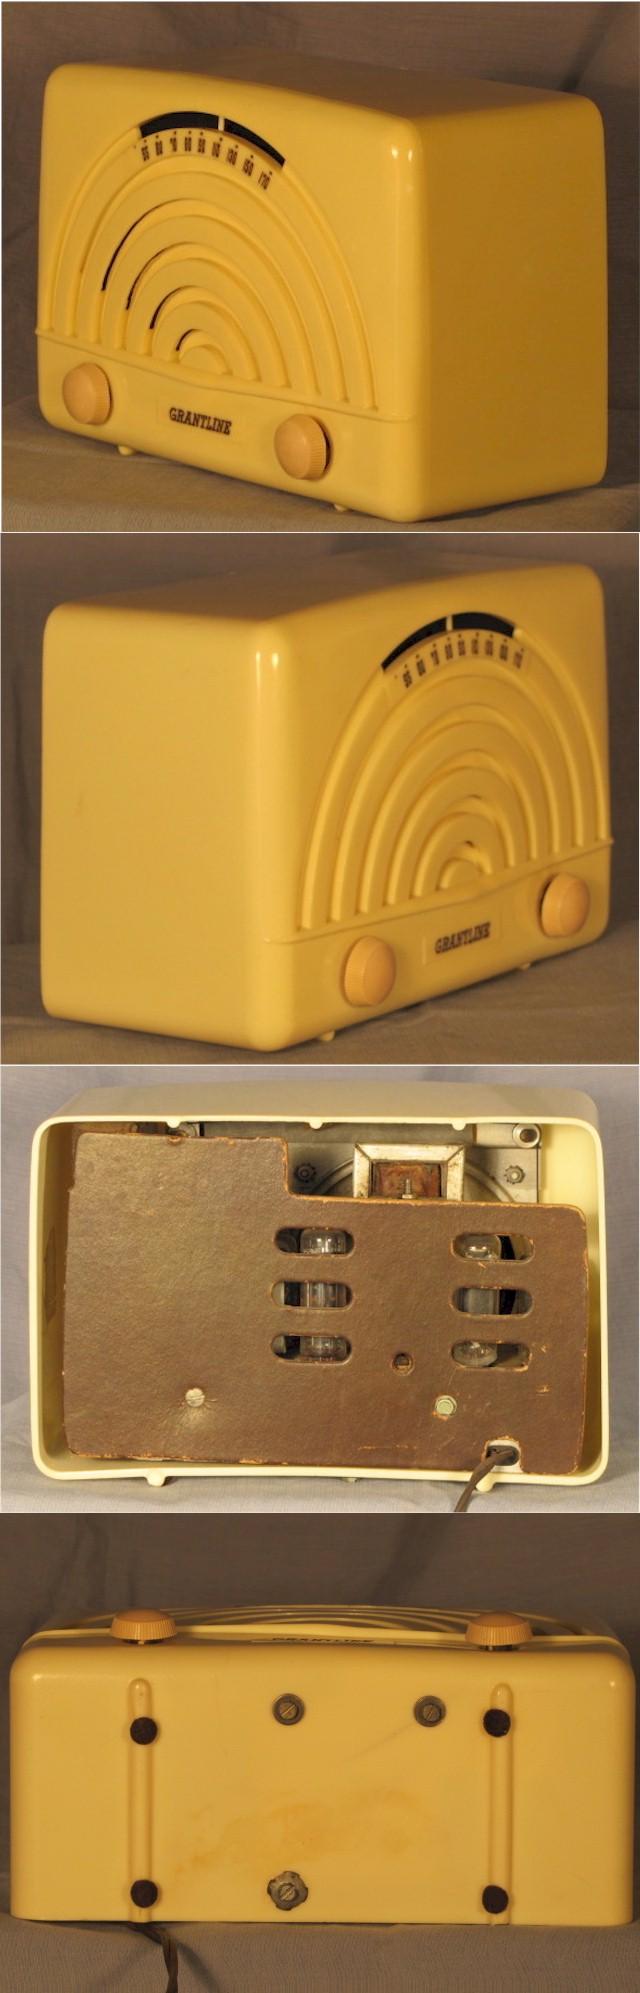 Grantline Radio (1950s)